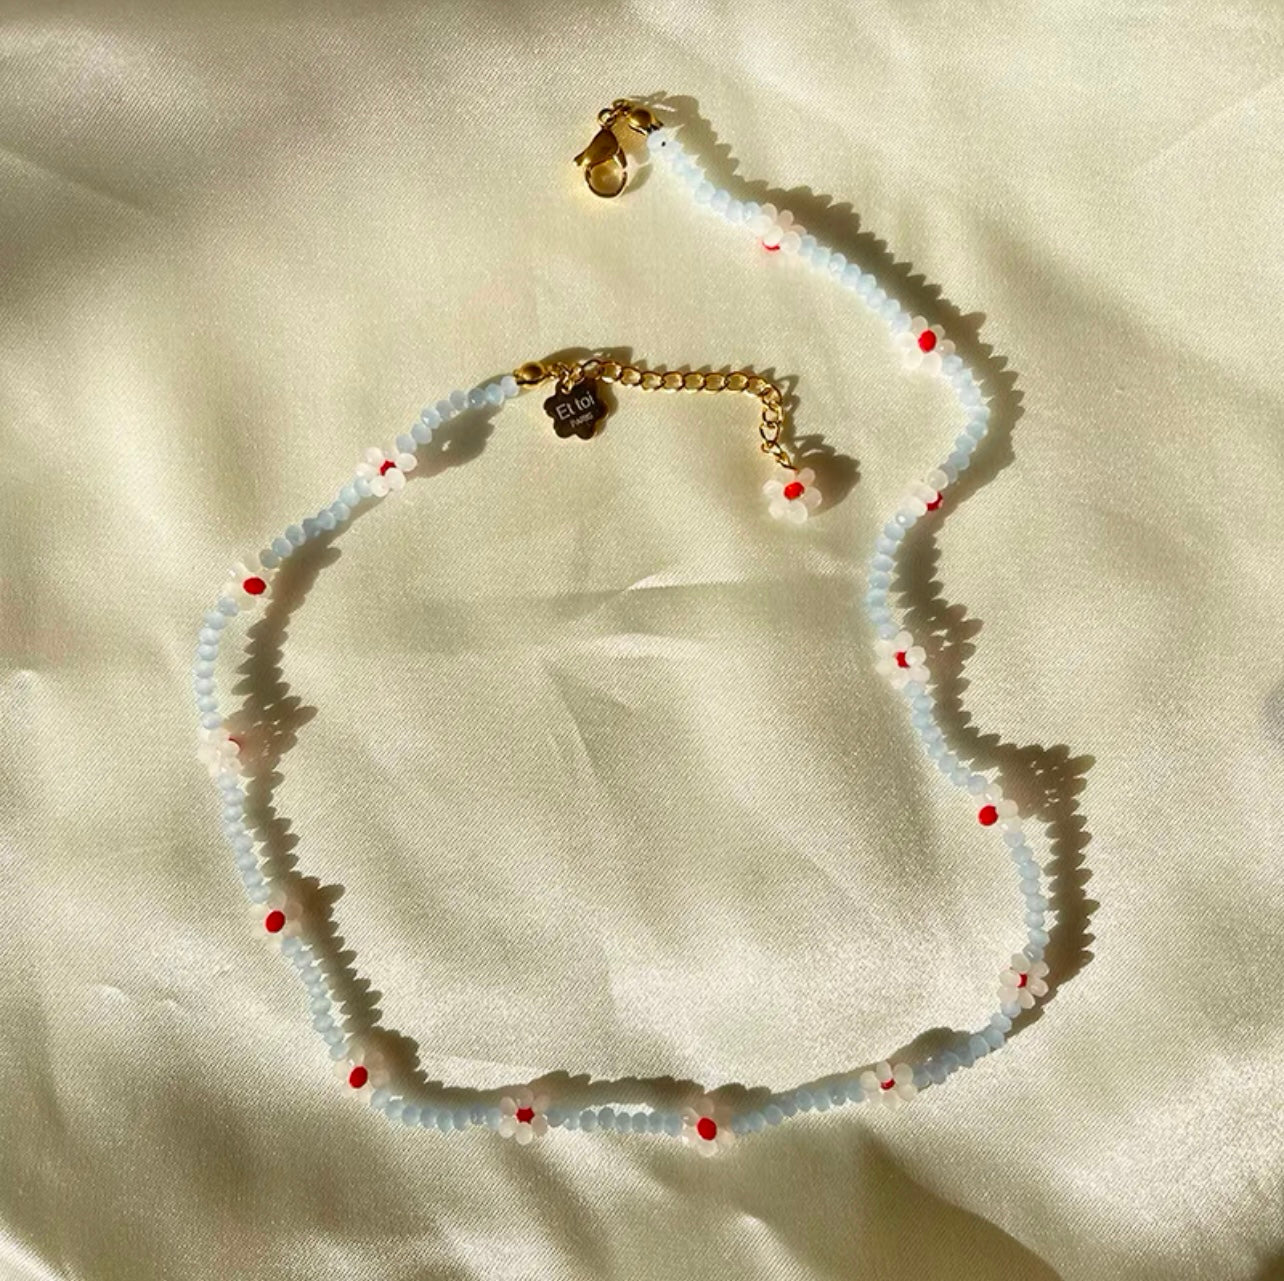 Hua Crystal necklace